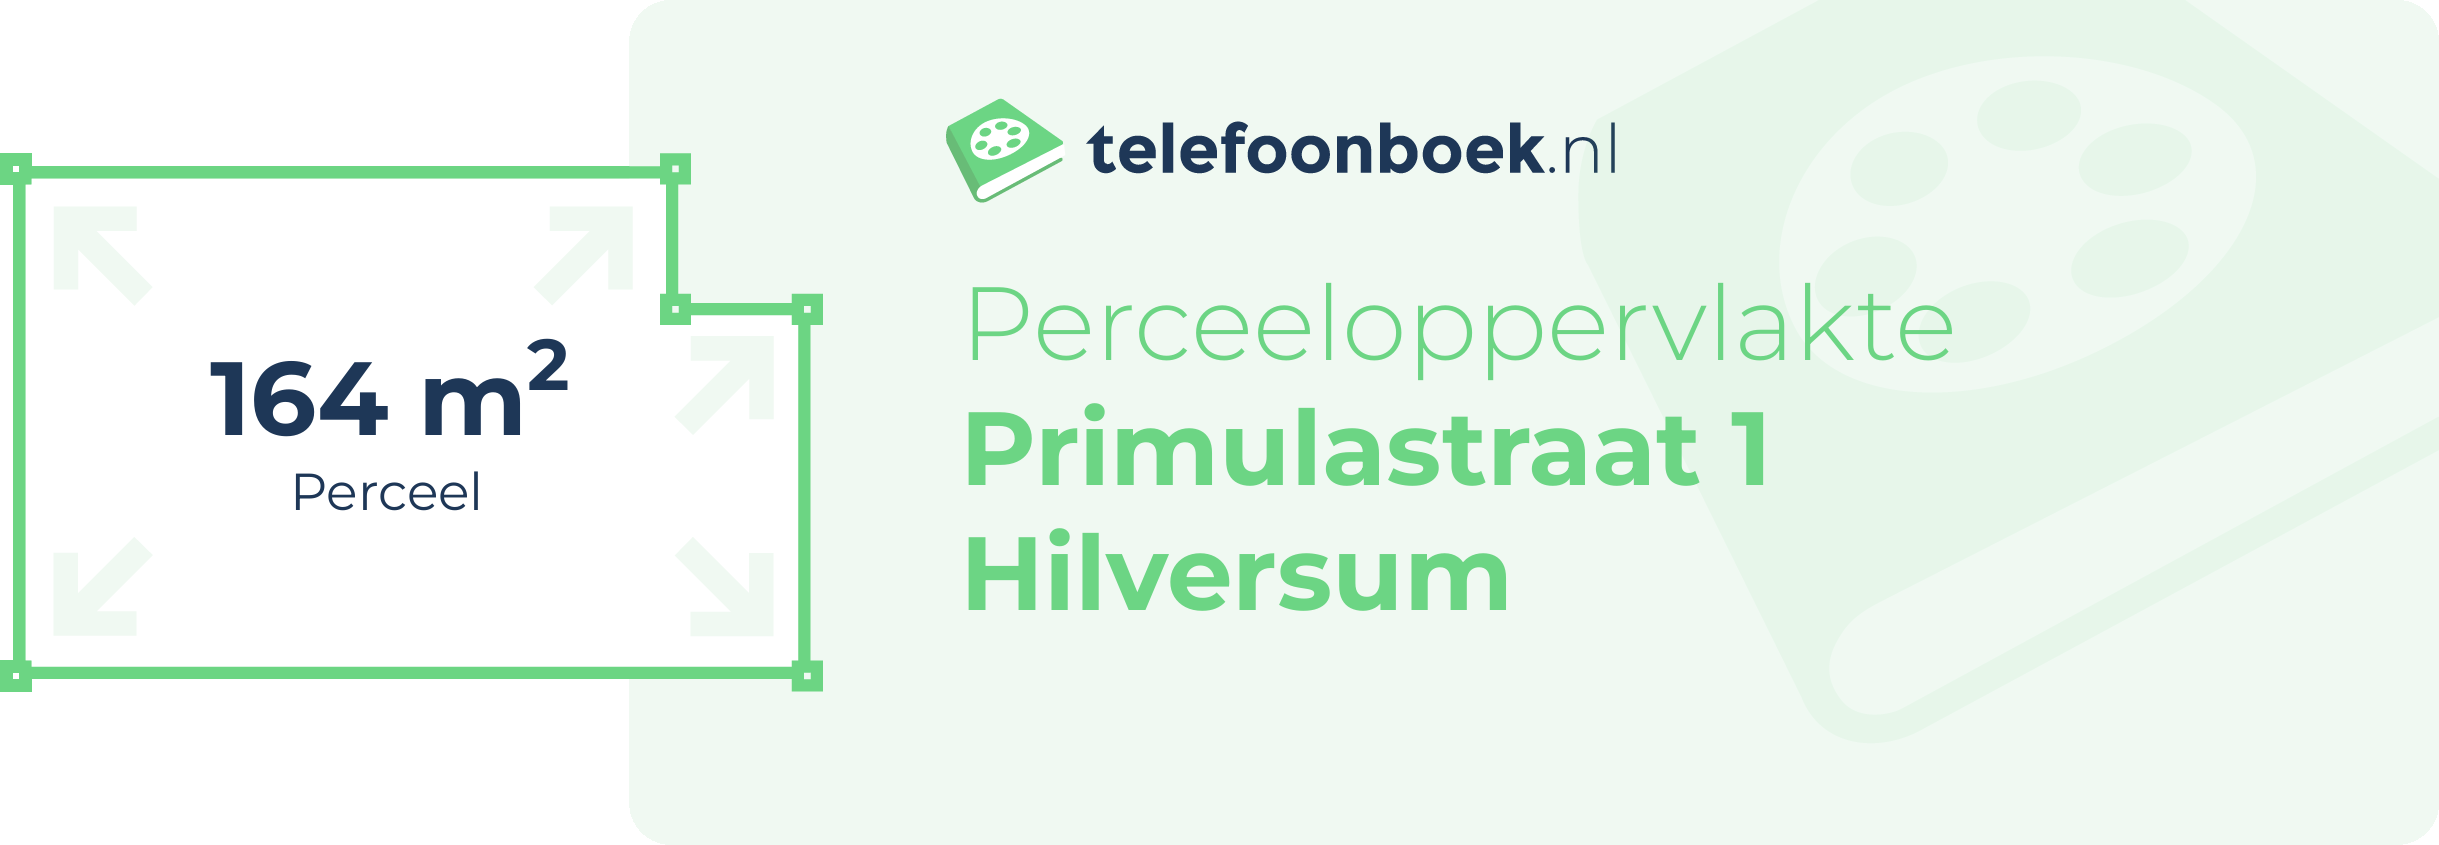 Perceeloppervlakte Primulastraat 1 Hilversum